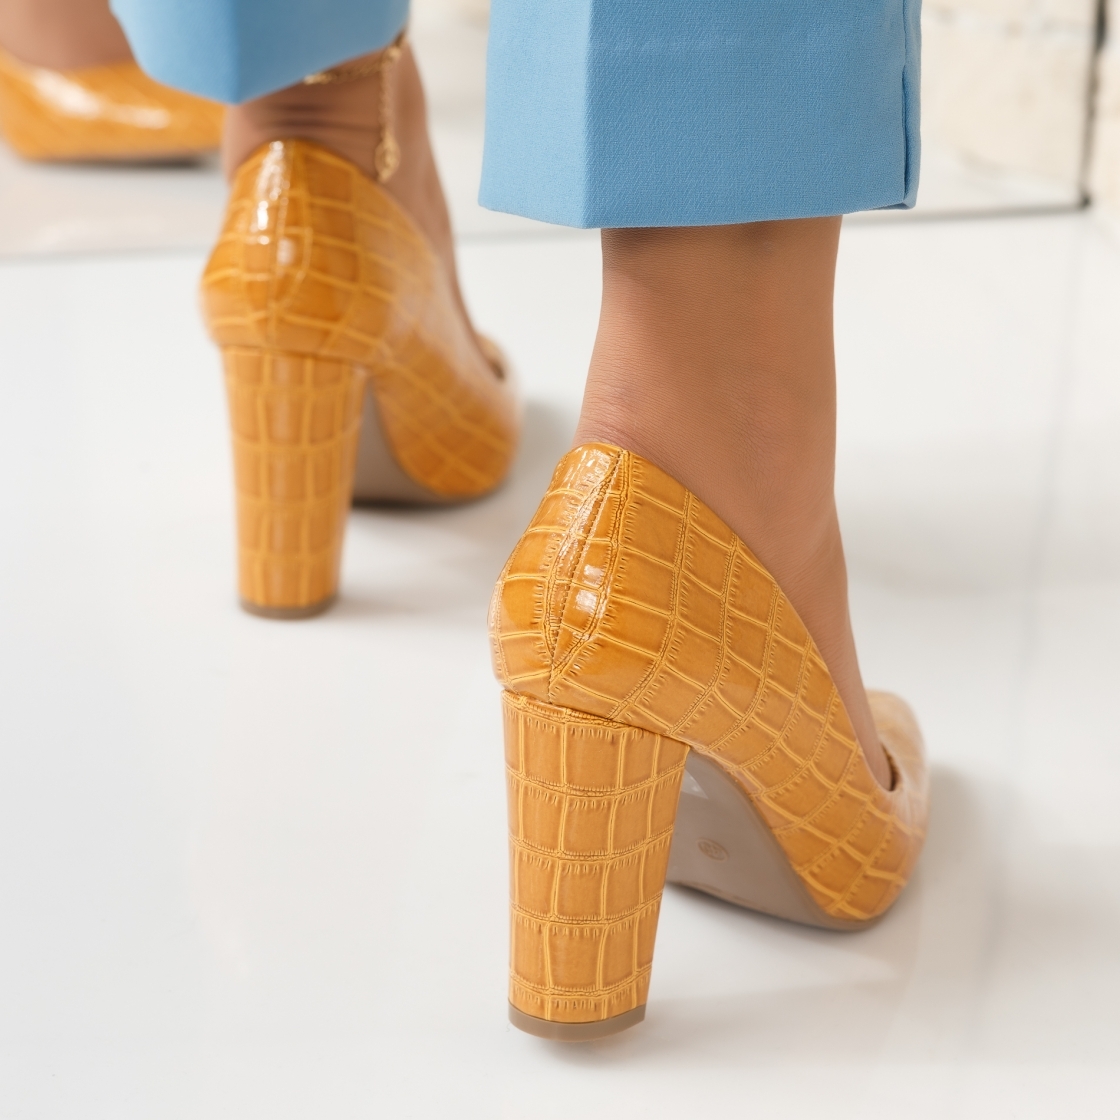 Pantofi Dama cu Toc Mabel Galbeni #3937M